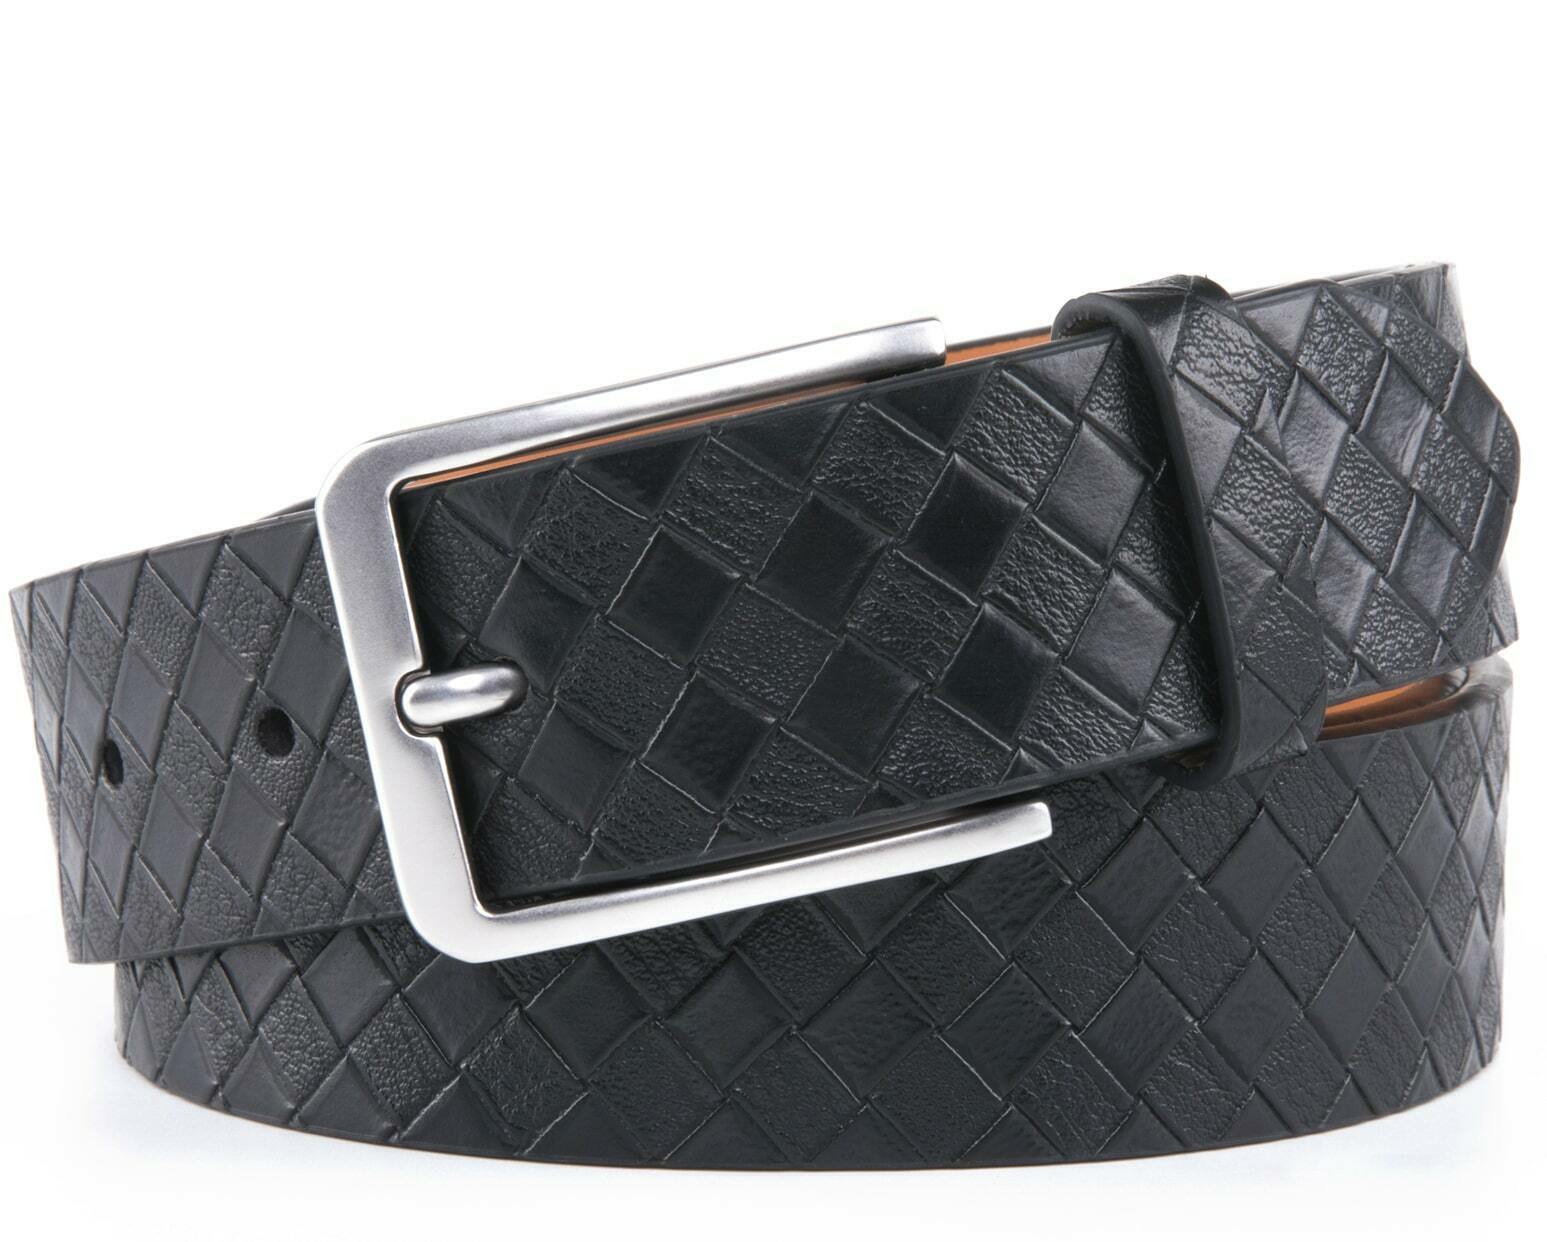 MROYALE Men's Reversible Leather Belt | 1.25” Waist Strap Silver Buckle | 2-in-1 Design